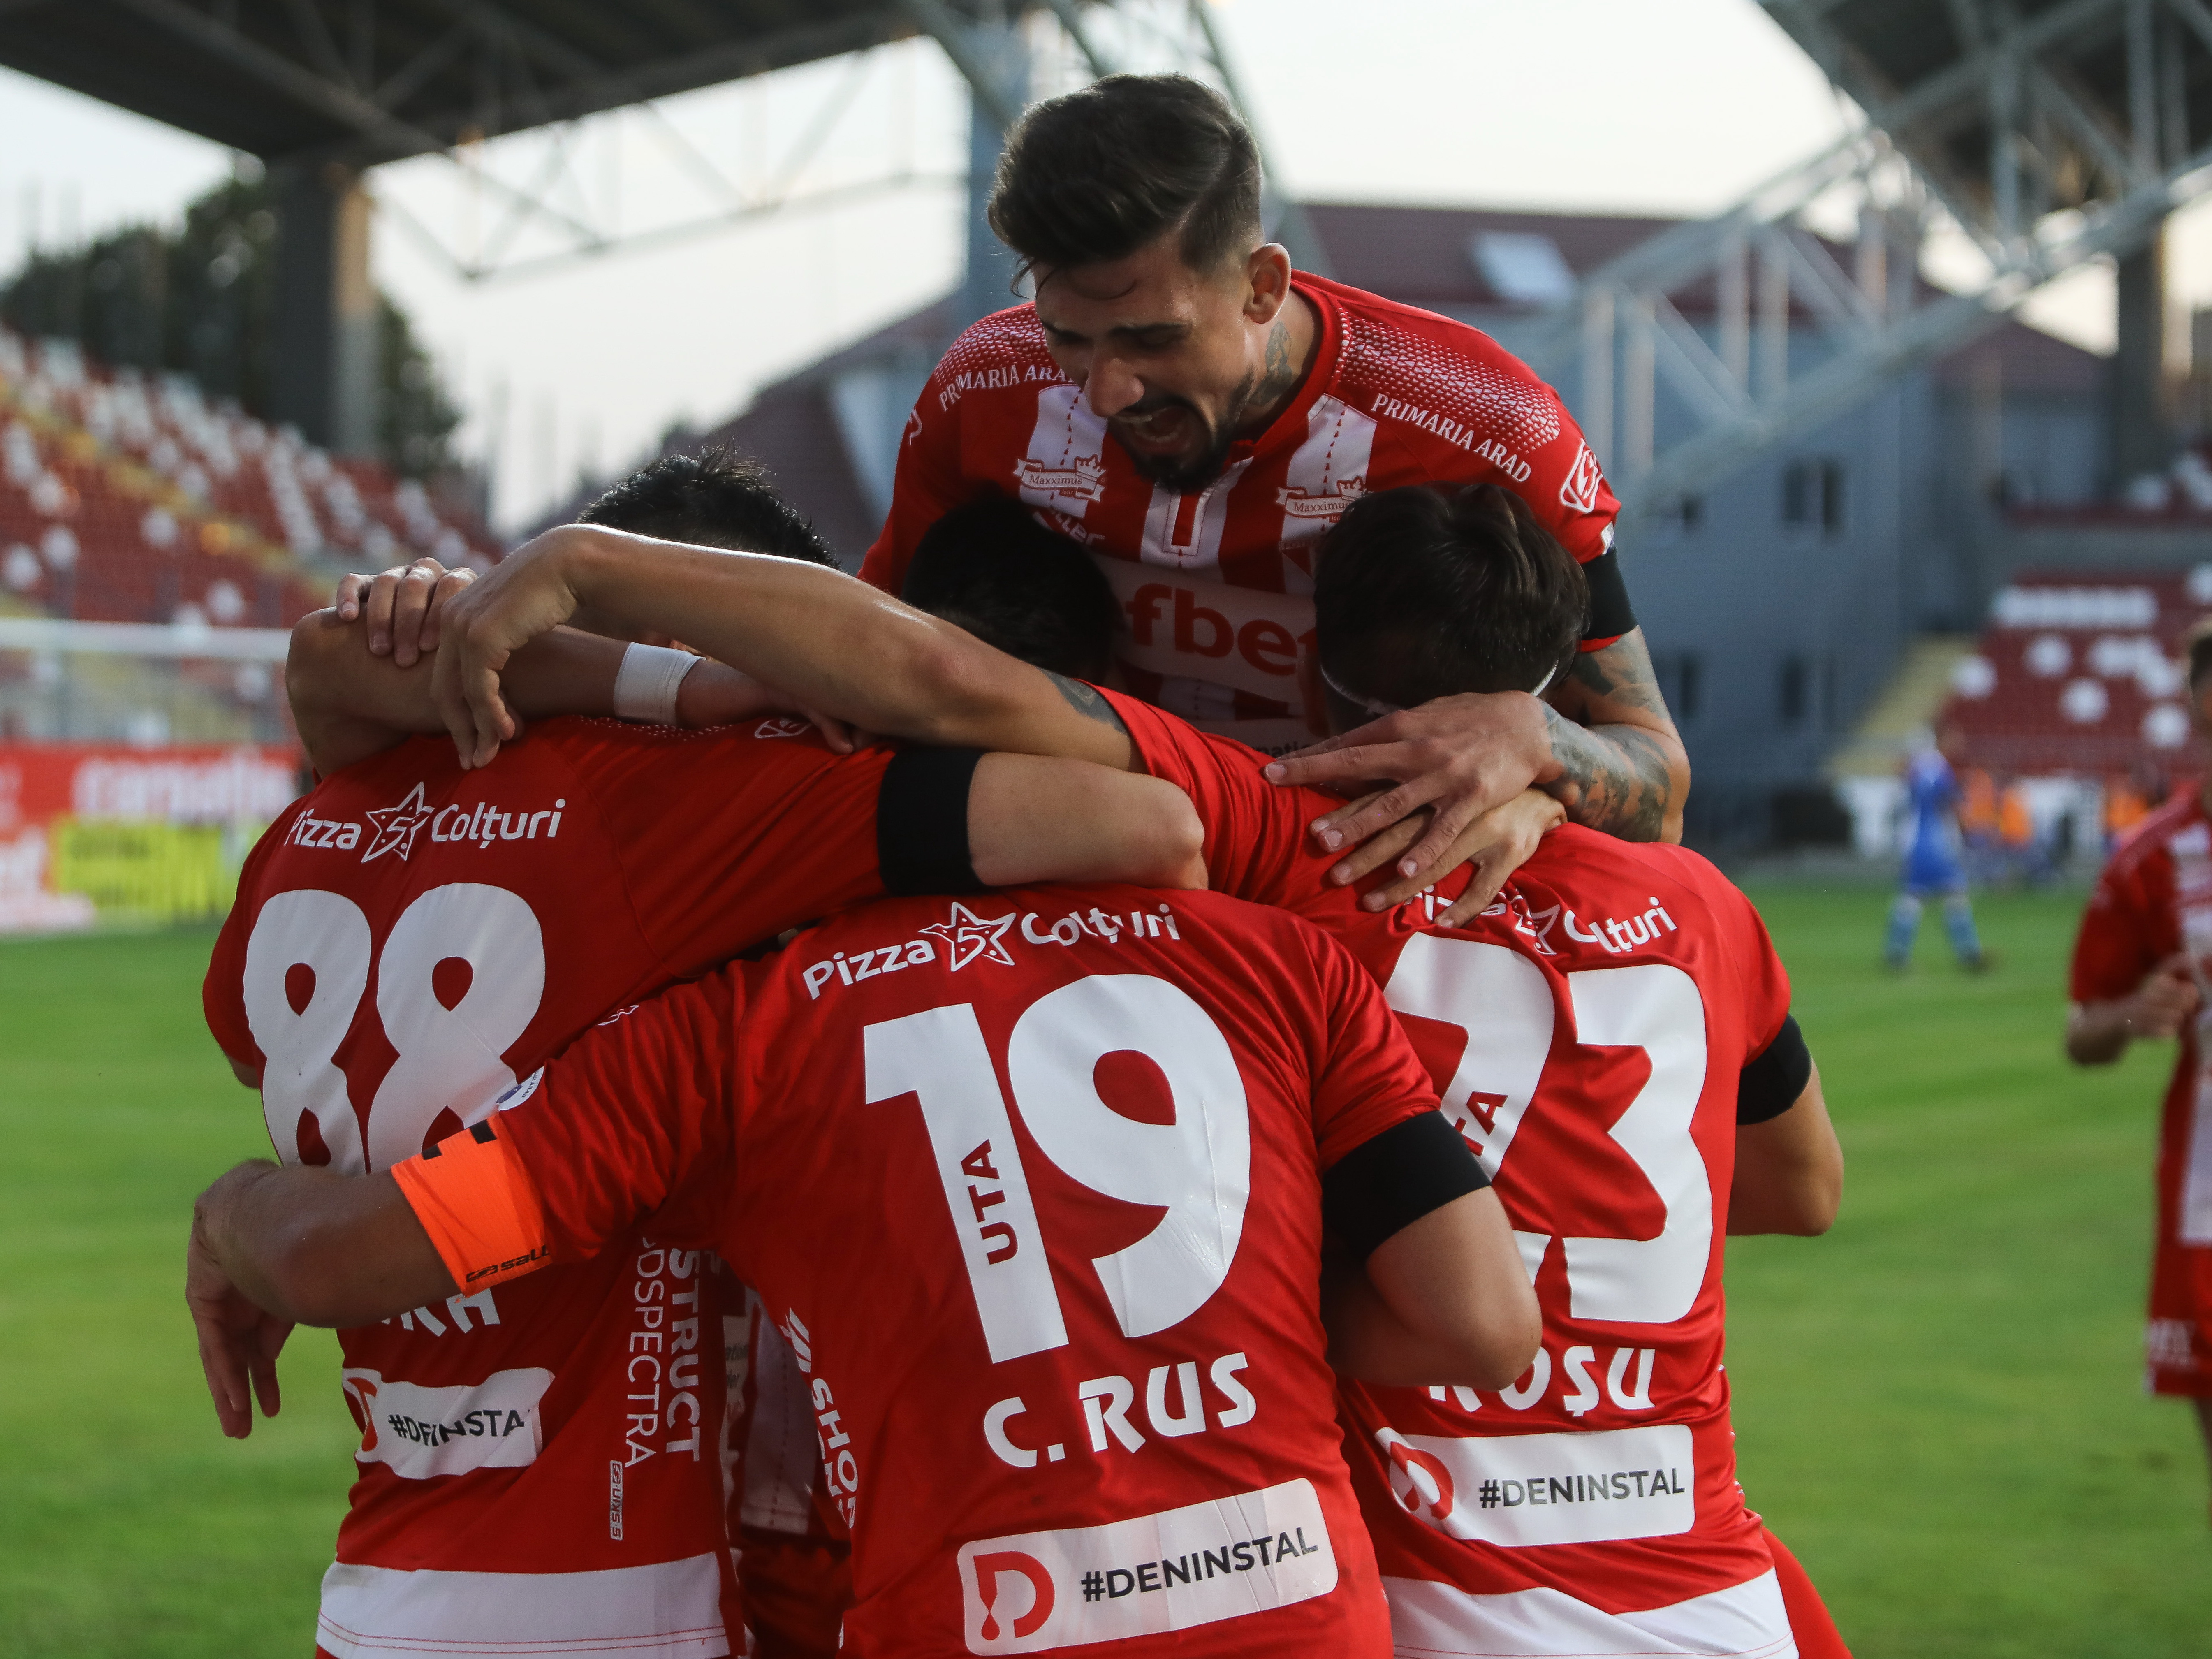 Primul gol marcat de UTA pe noul stadion ”Francisc Neuman” din Arad